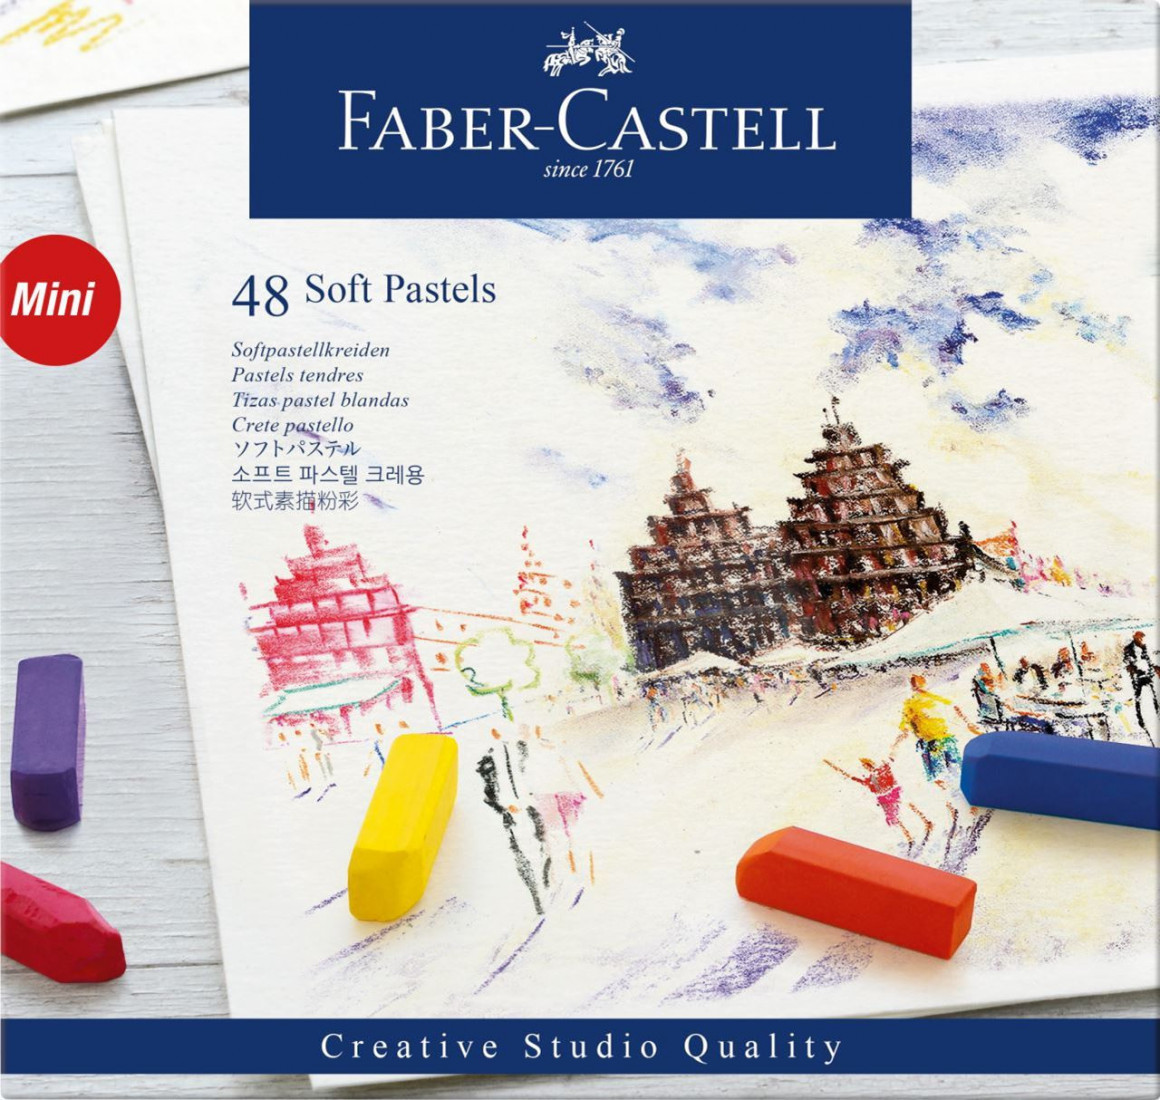 https://zafpens.com/129970-large_default/faber-castell-soft-pastels-set-of-48-mini-creative-studio128248.jpg